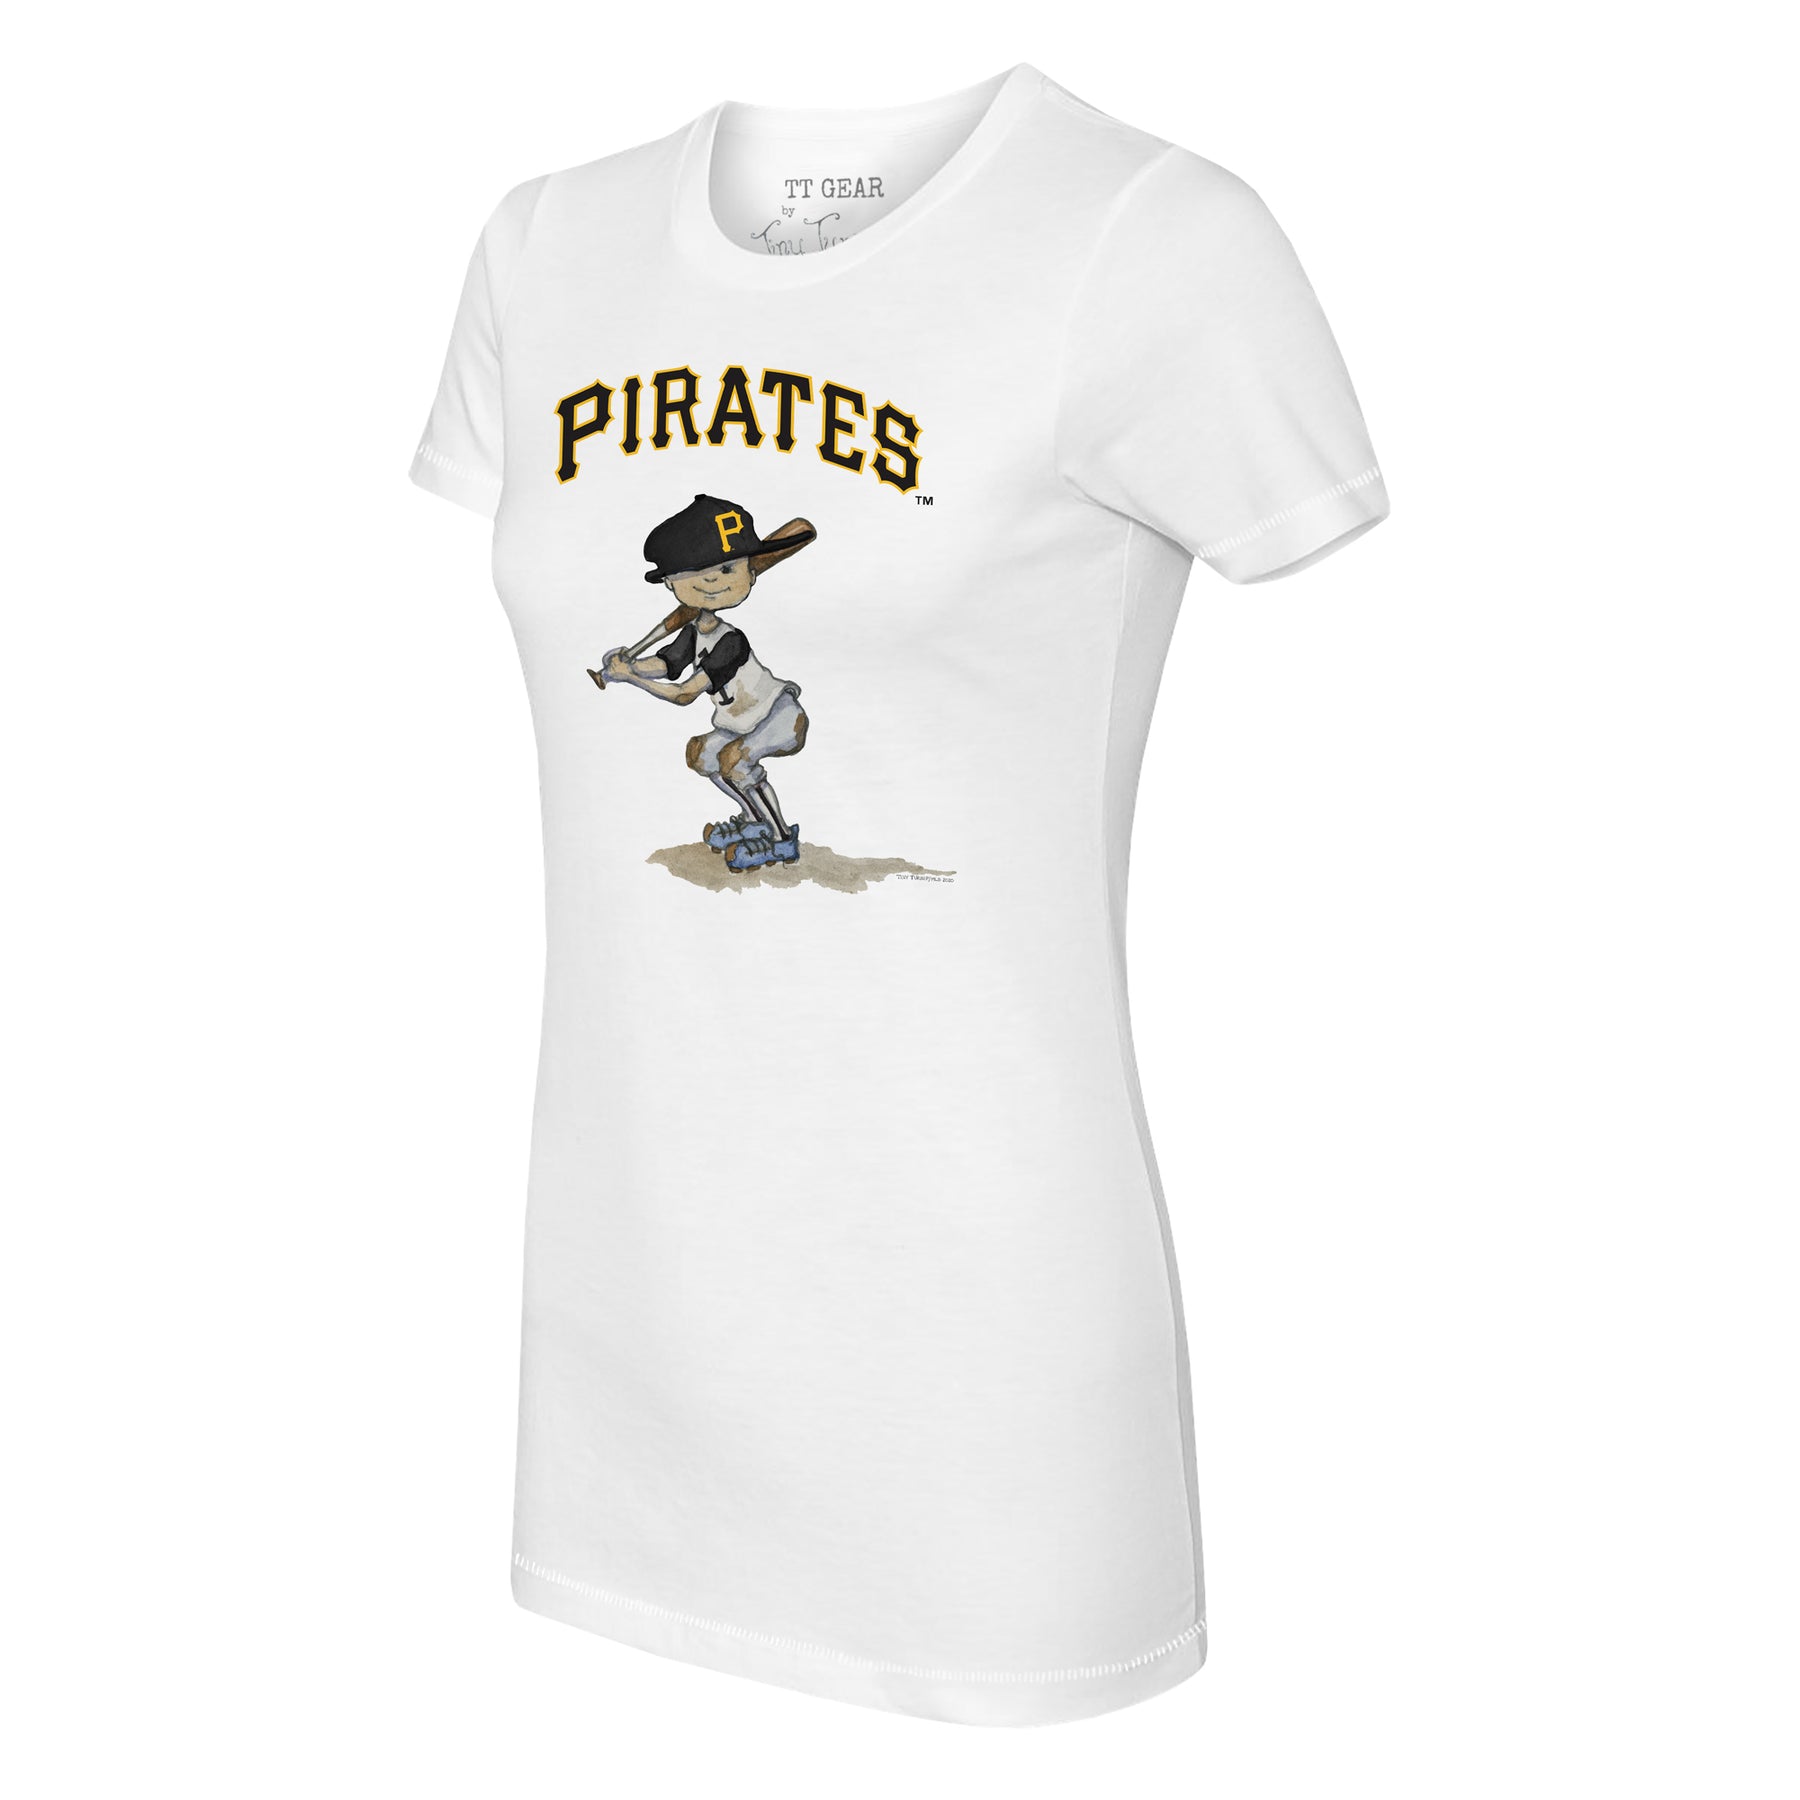 Pittsburgh Pirates Slugger Tee Shirt